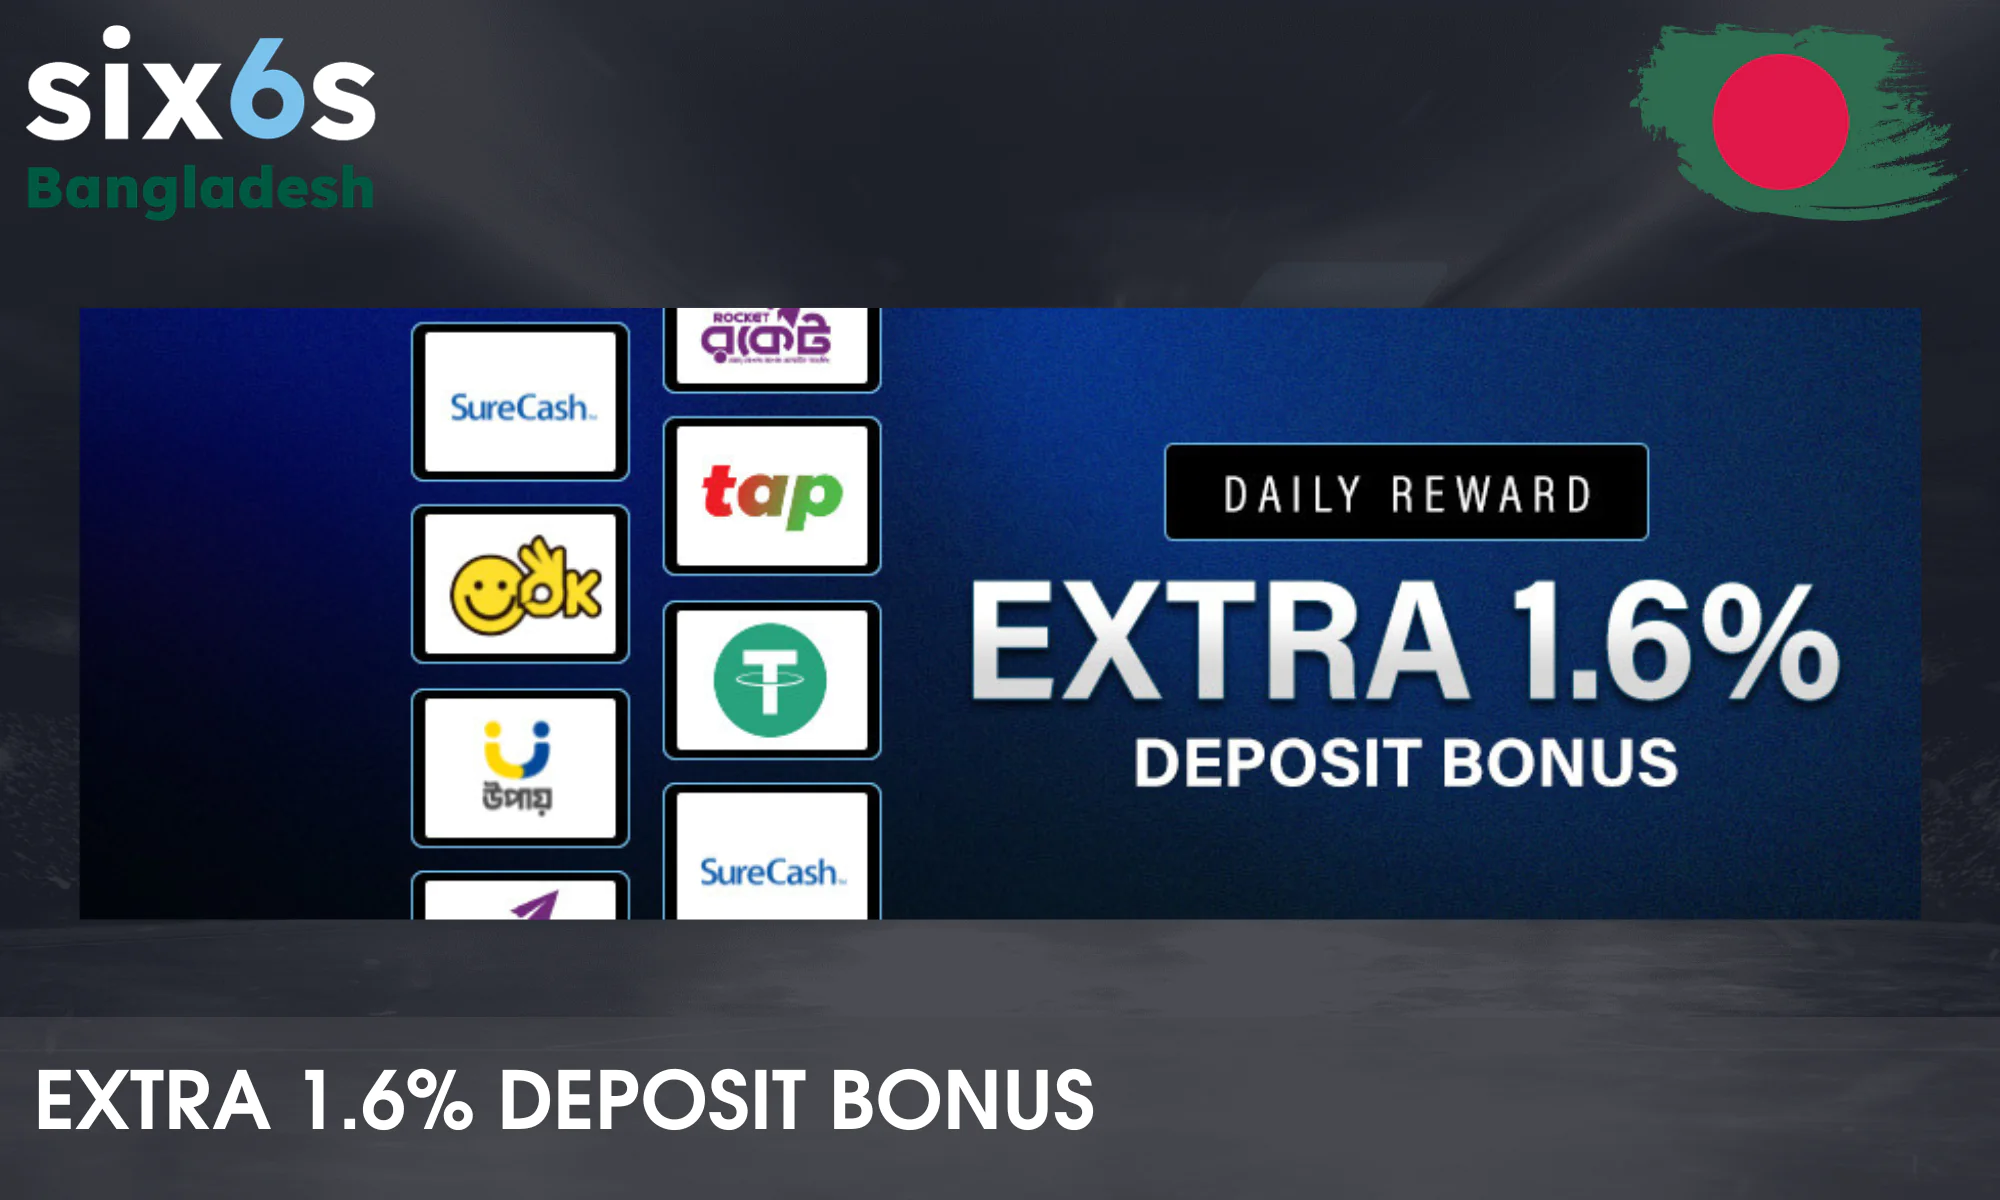 1.6% Six6s deposit bonus